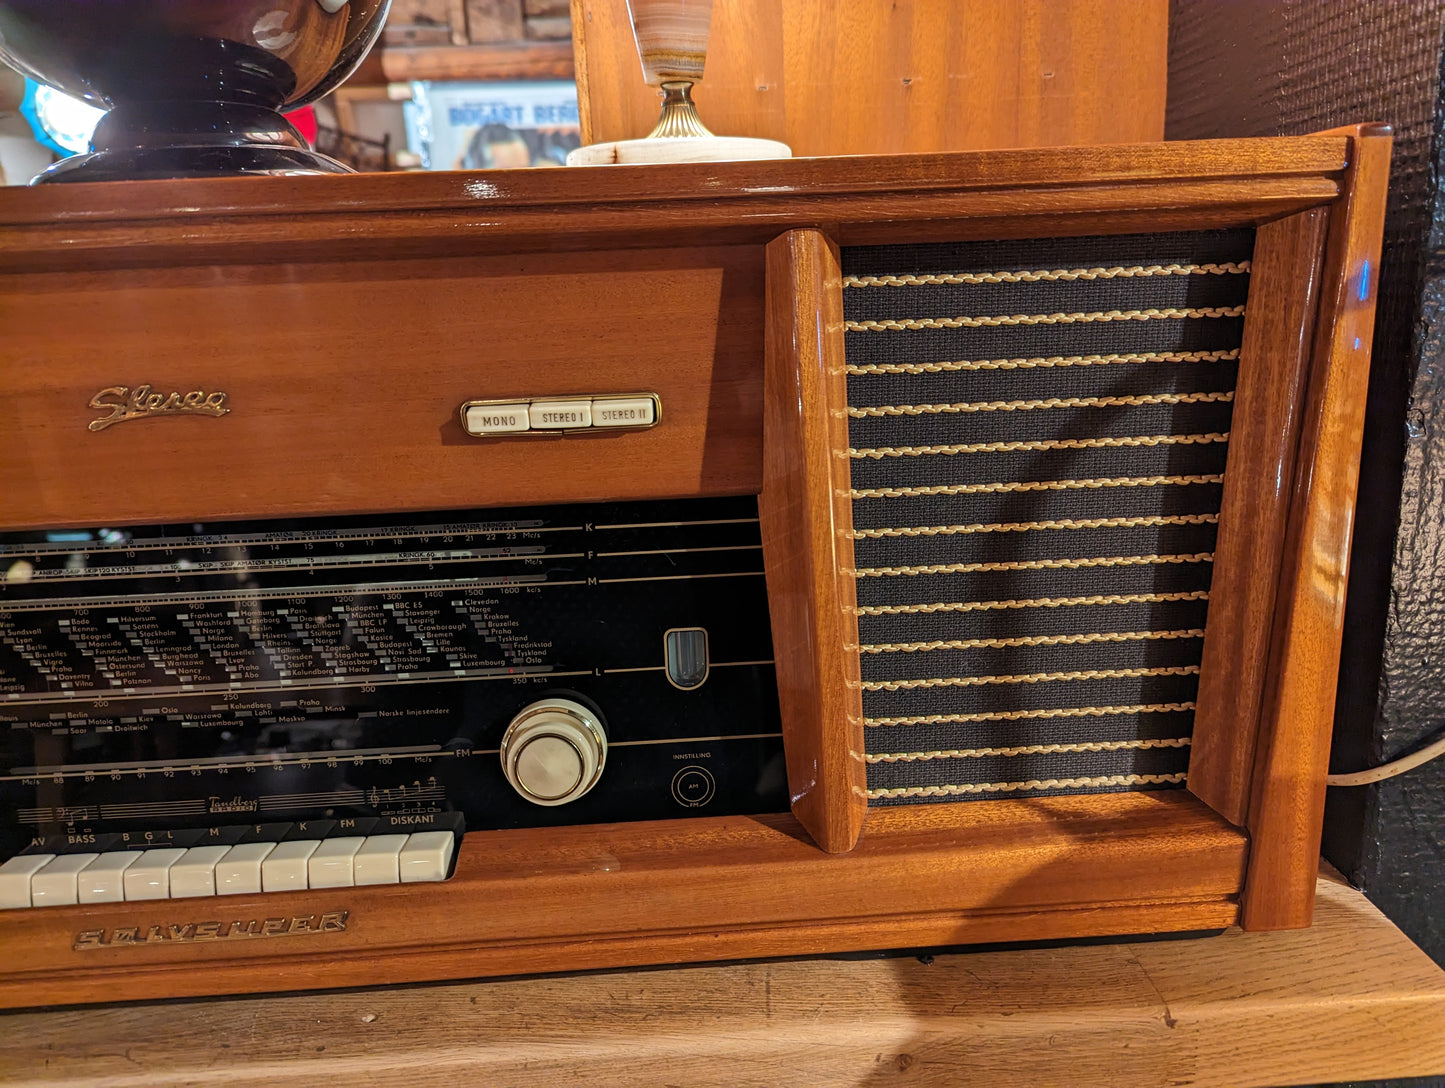 Sølvsuper 75 radio vintage